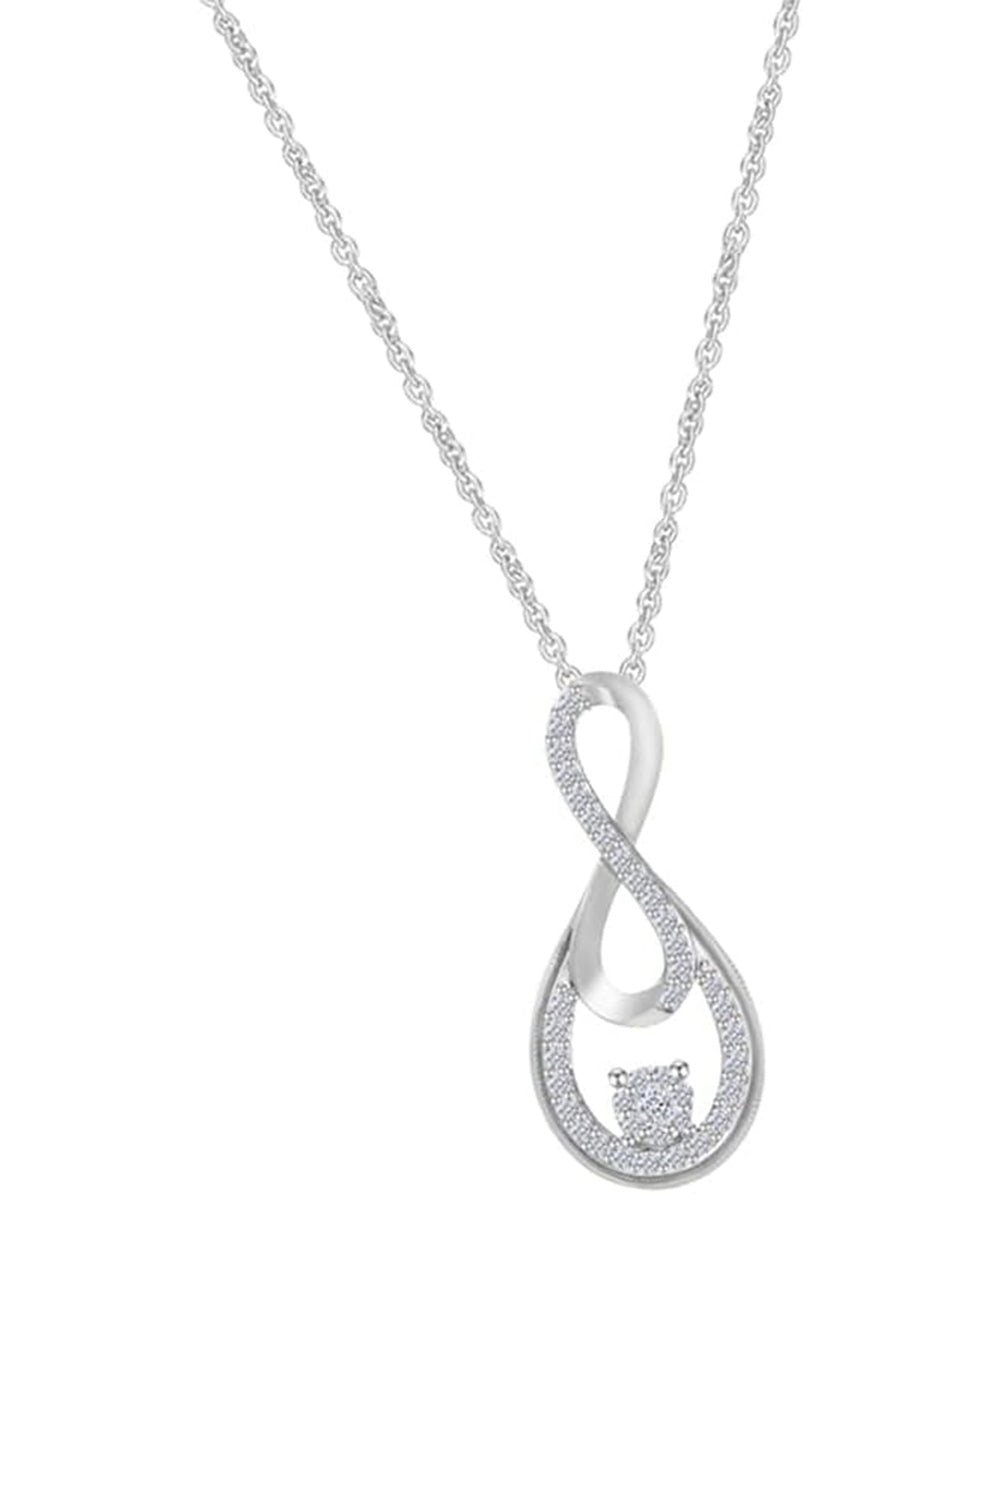 White Gold Color Yaathi Double Infinity Pendant Necklace, Pendants Online 